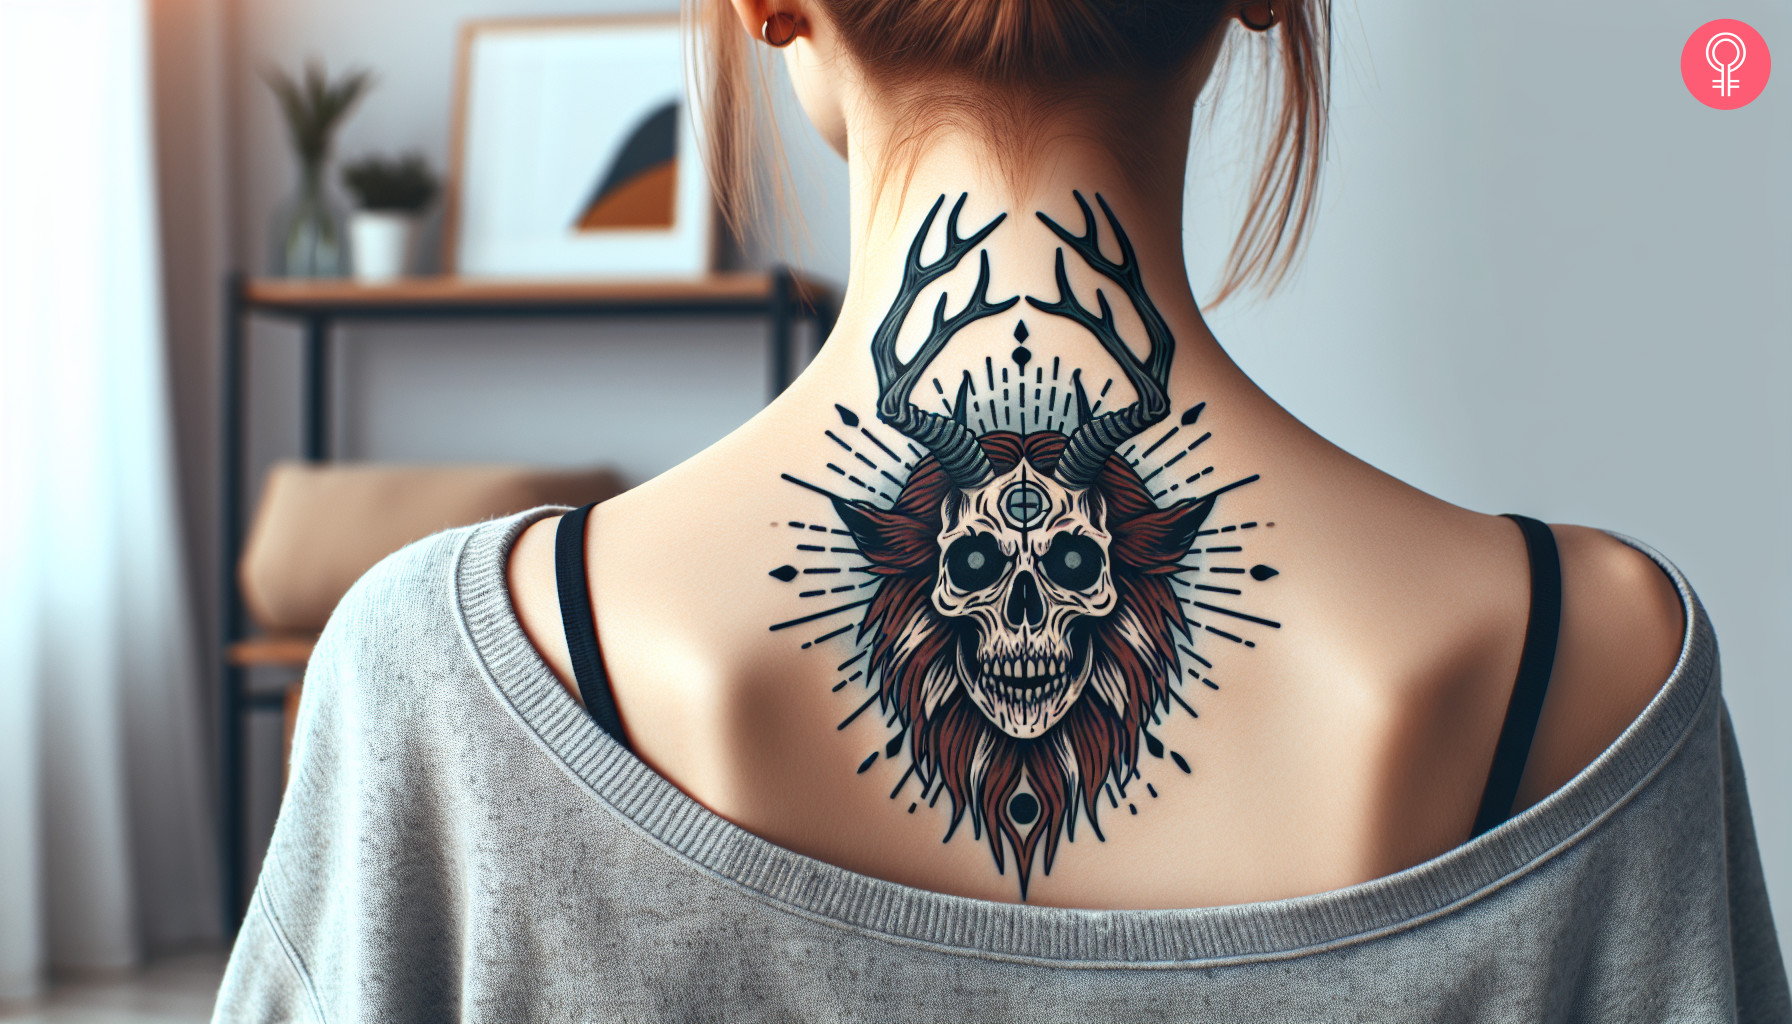 A wendigo tattoo on a woman’s back